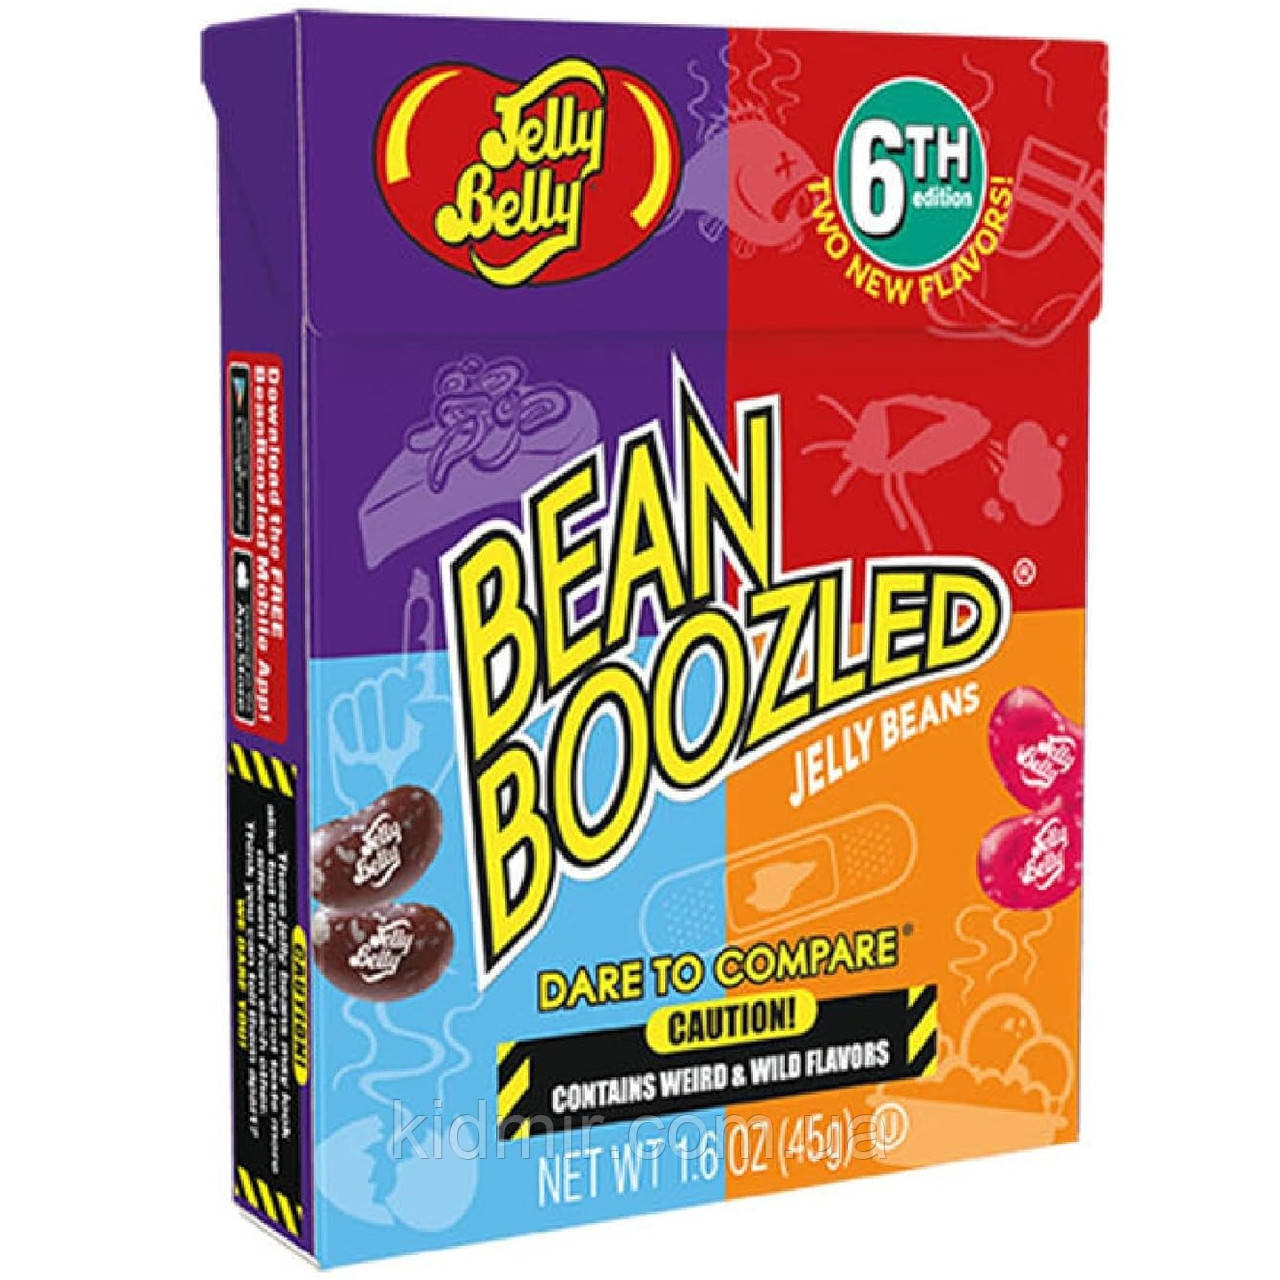 Jelly Belly Bean Boozled Цукерки Джеллі Беллі голкі Боби Гаррі Поттера 5 серія 45 грм